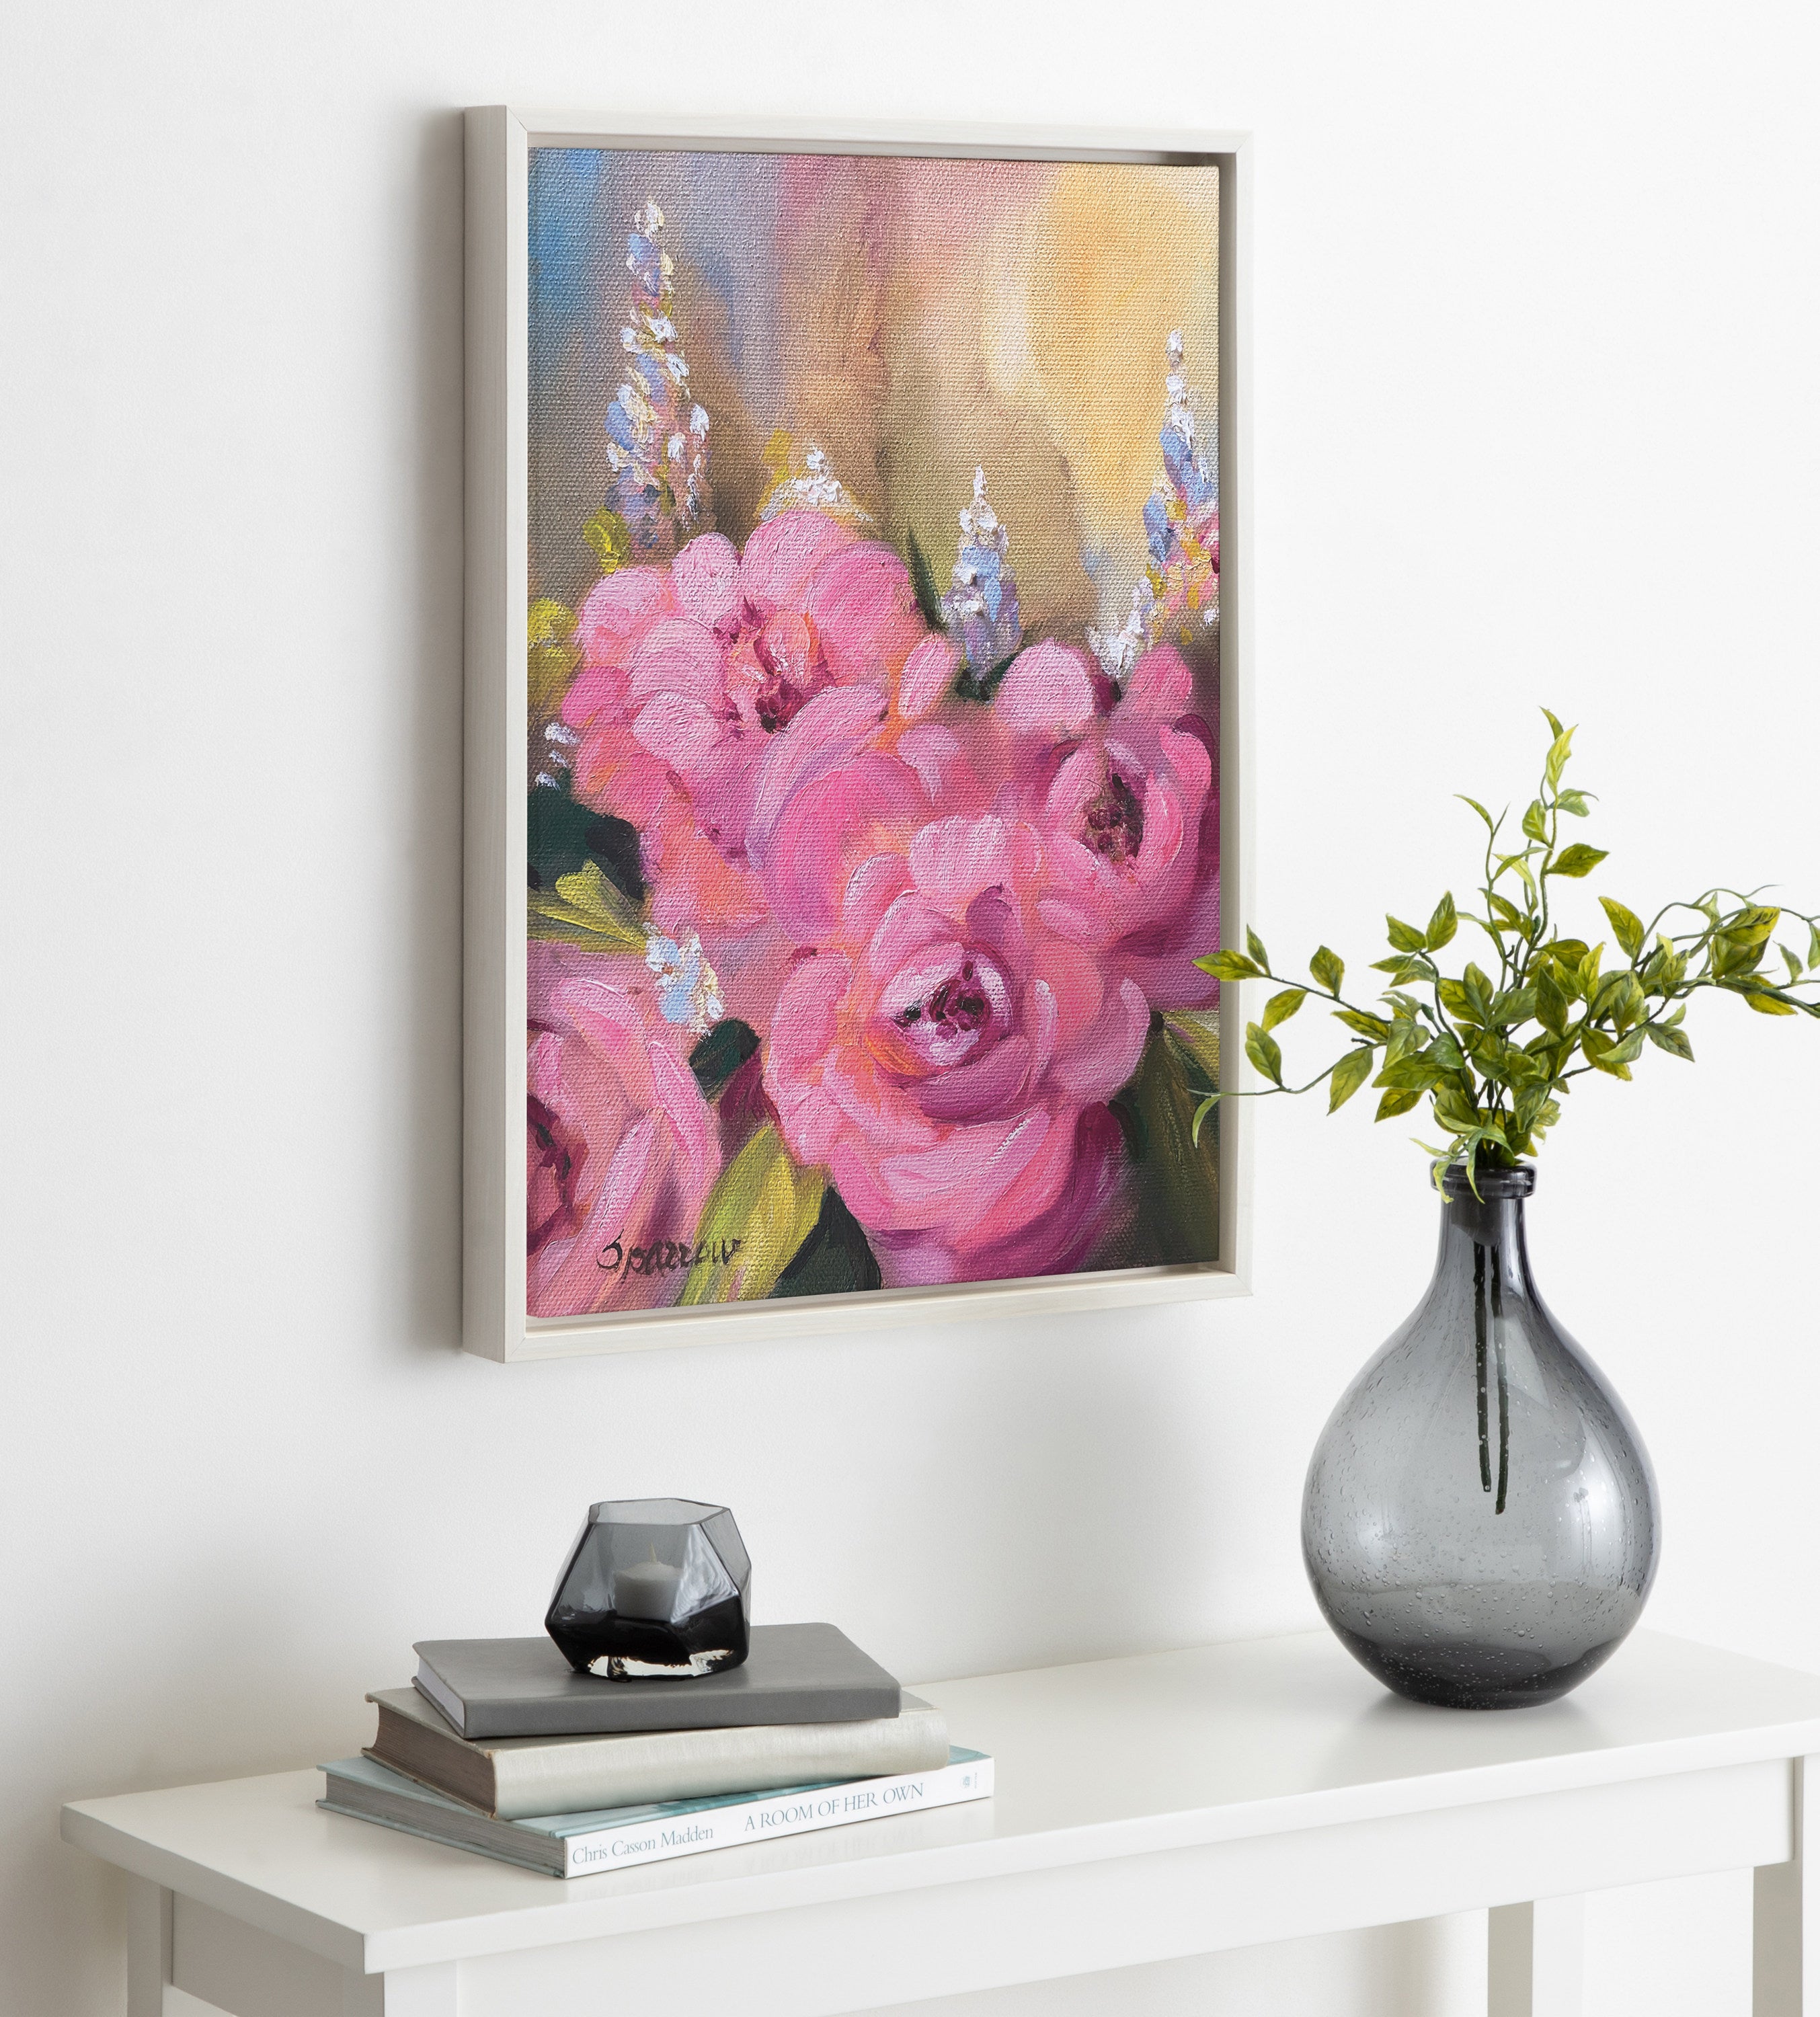 Sylvie Hot Pink Framed Canvas by Mary Sparrow